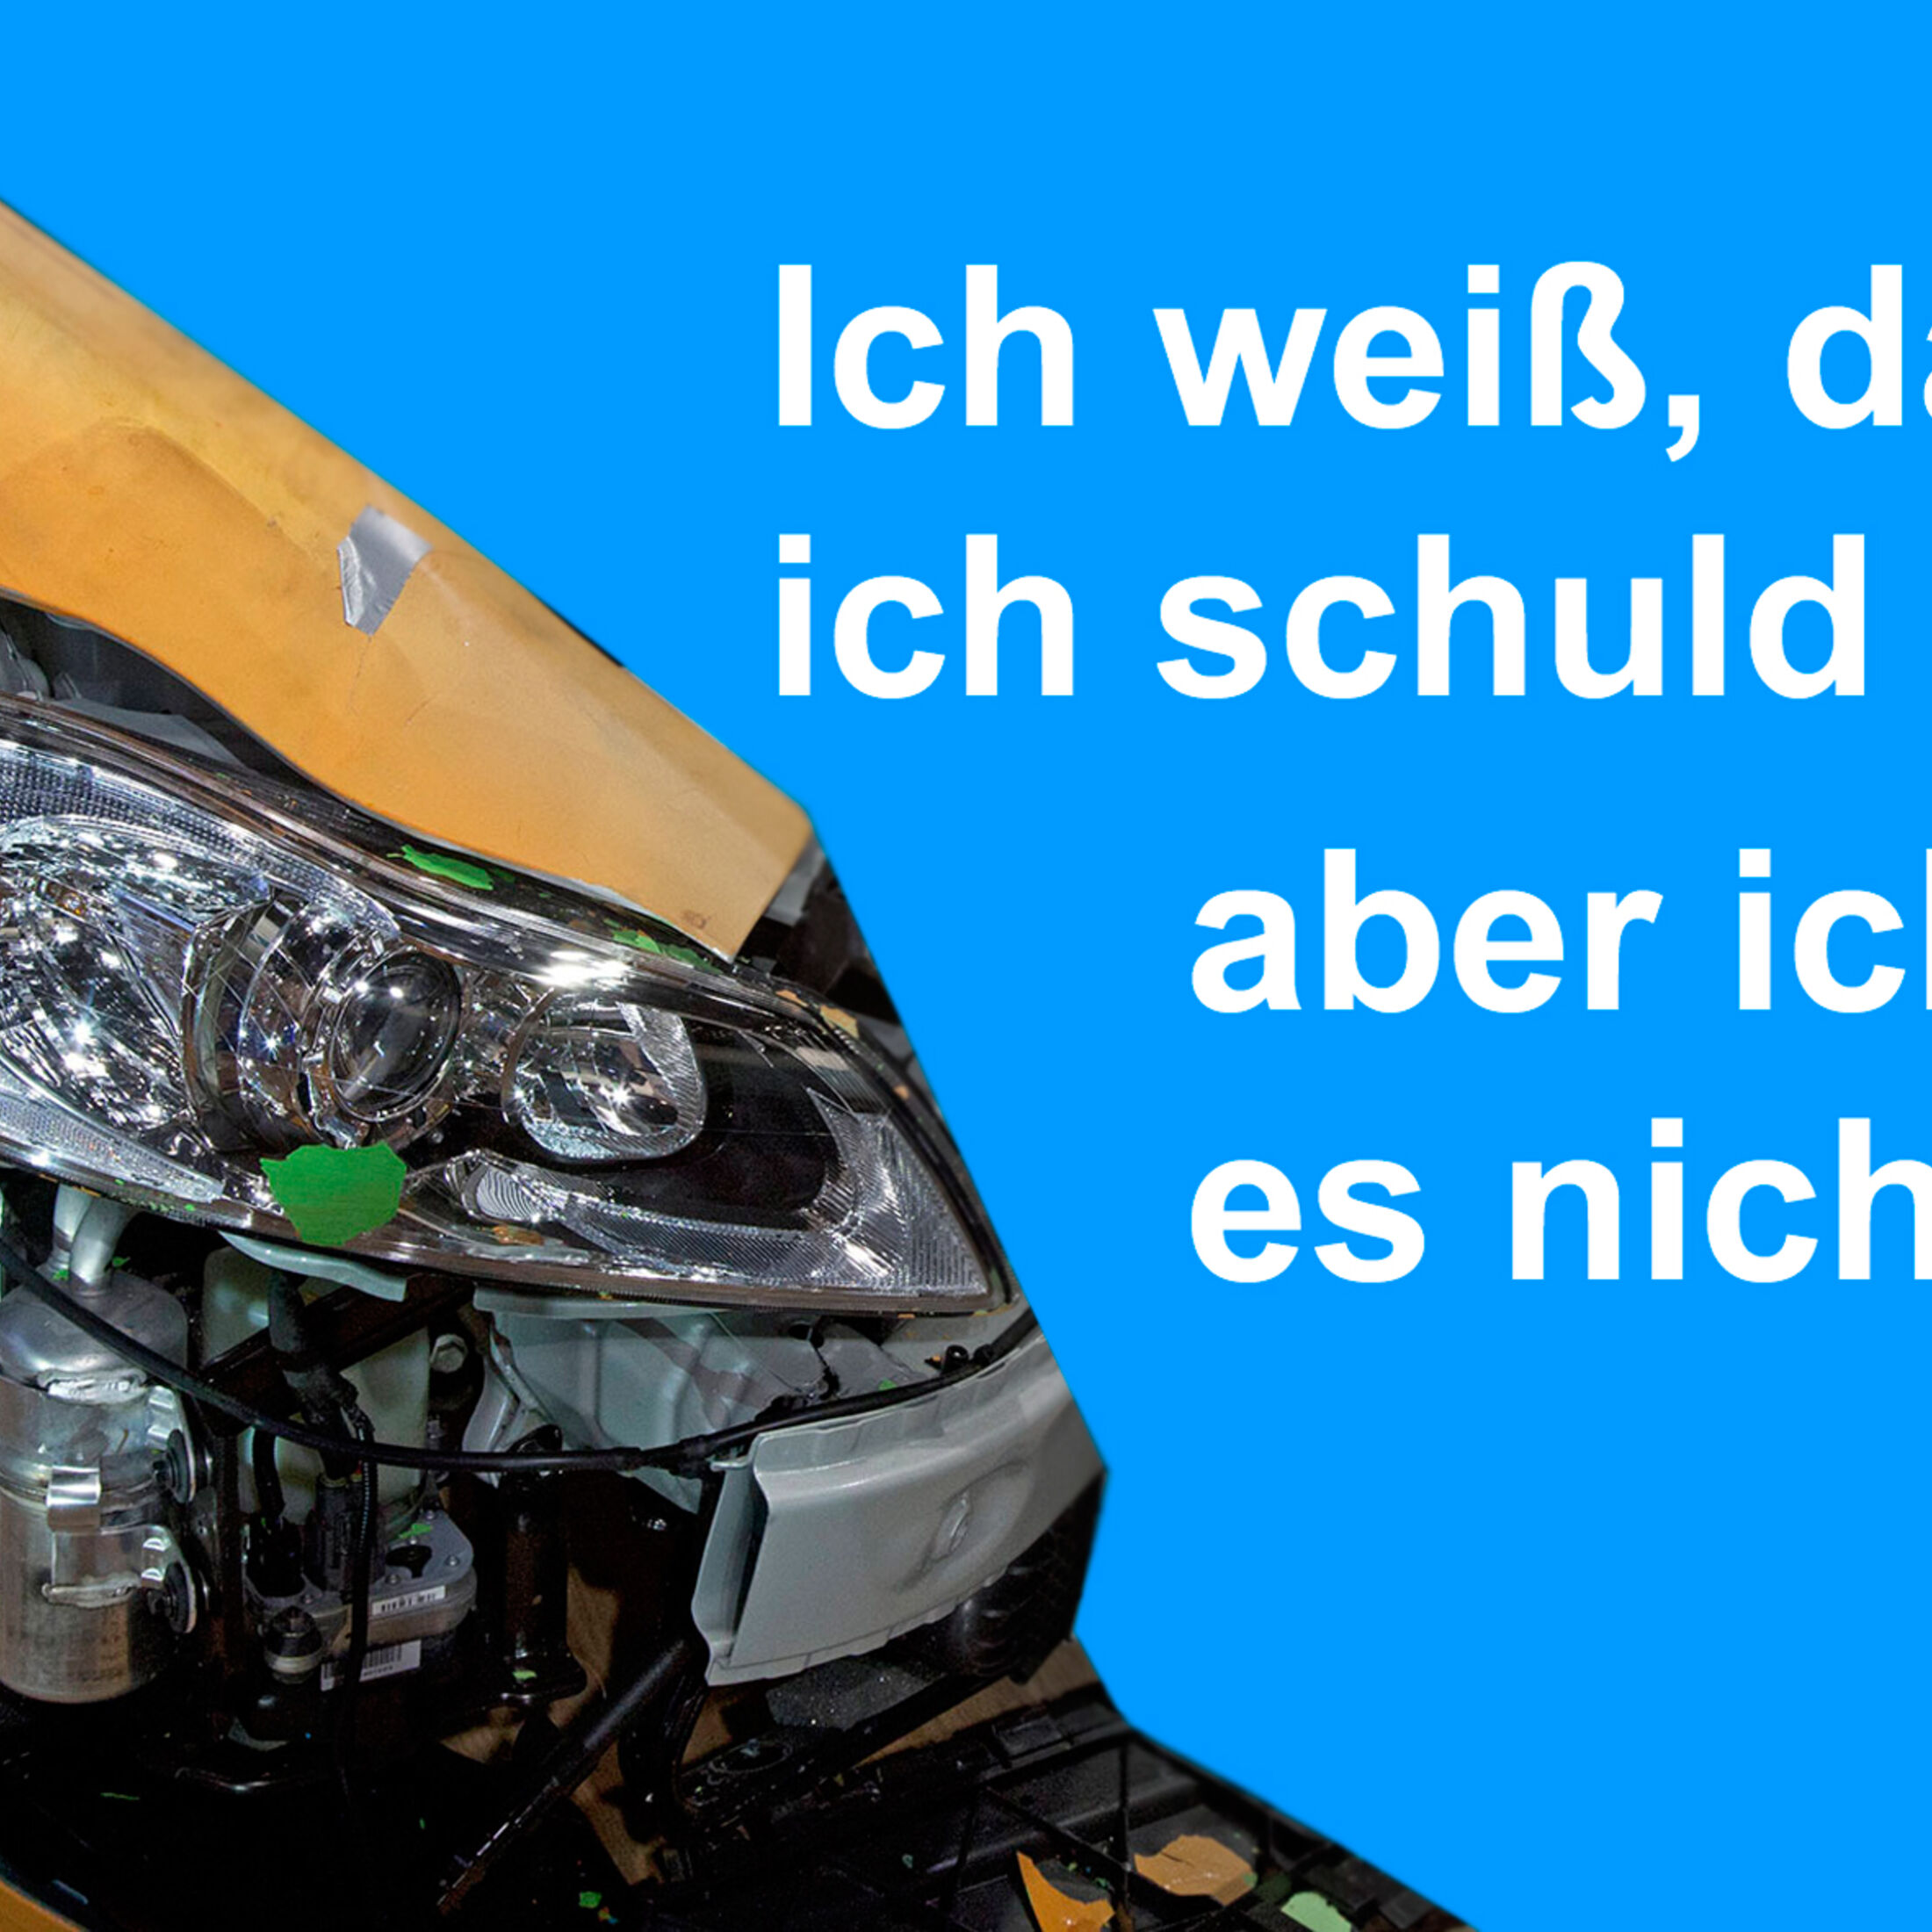 https://imgr1.auto-motor-und-sport.de/Versicherung-witzig-Special-jsonLd1x1-7dca4078-1851389.jpg